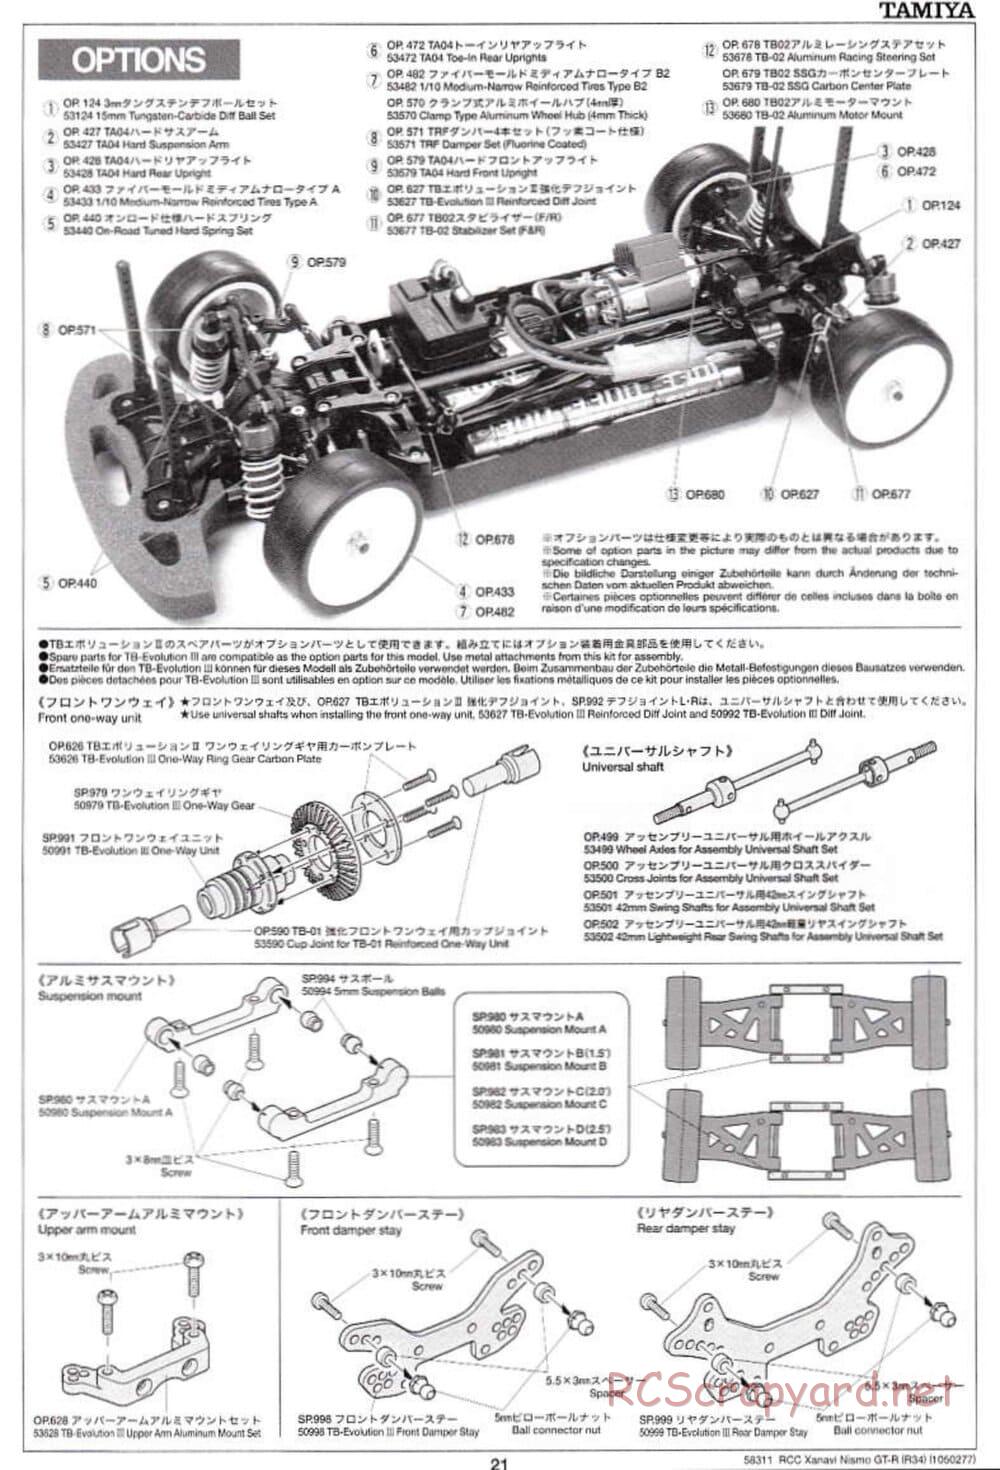 Tamiya - Xanavi Nismo GT-R (R34) - TB-02 Chassis - Manual - Page 21